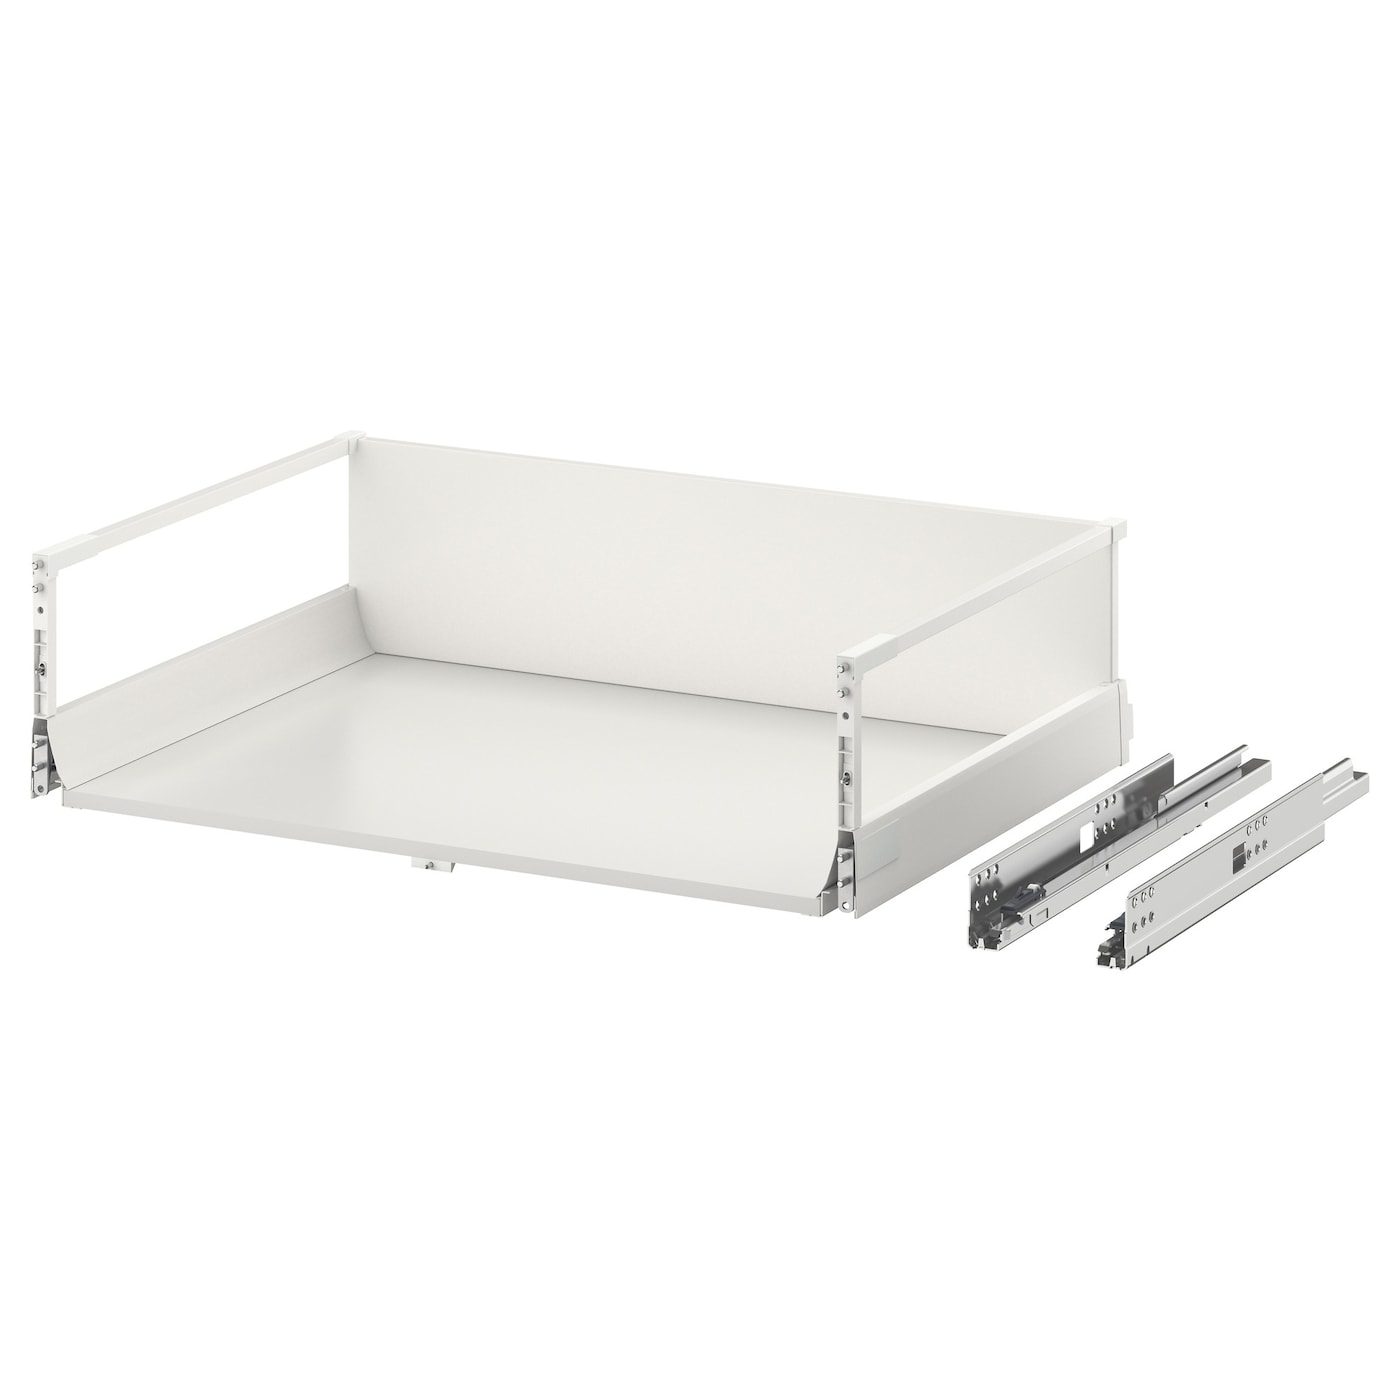 Выдвижной ящик  - EXCEPTIONELL IKEA/ ЭКСЕПТИОНЕЛЛЬ  ИКЕА, 76,4х21,4 см, белый